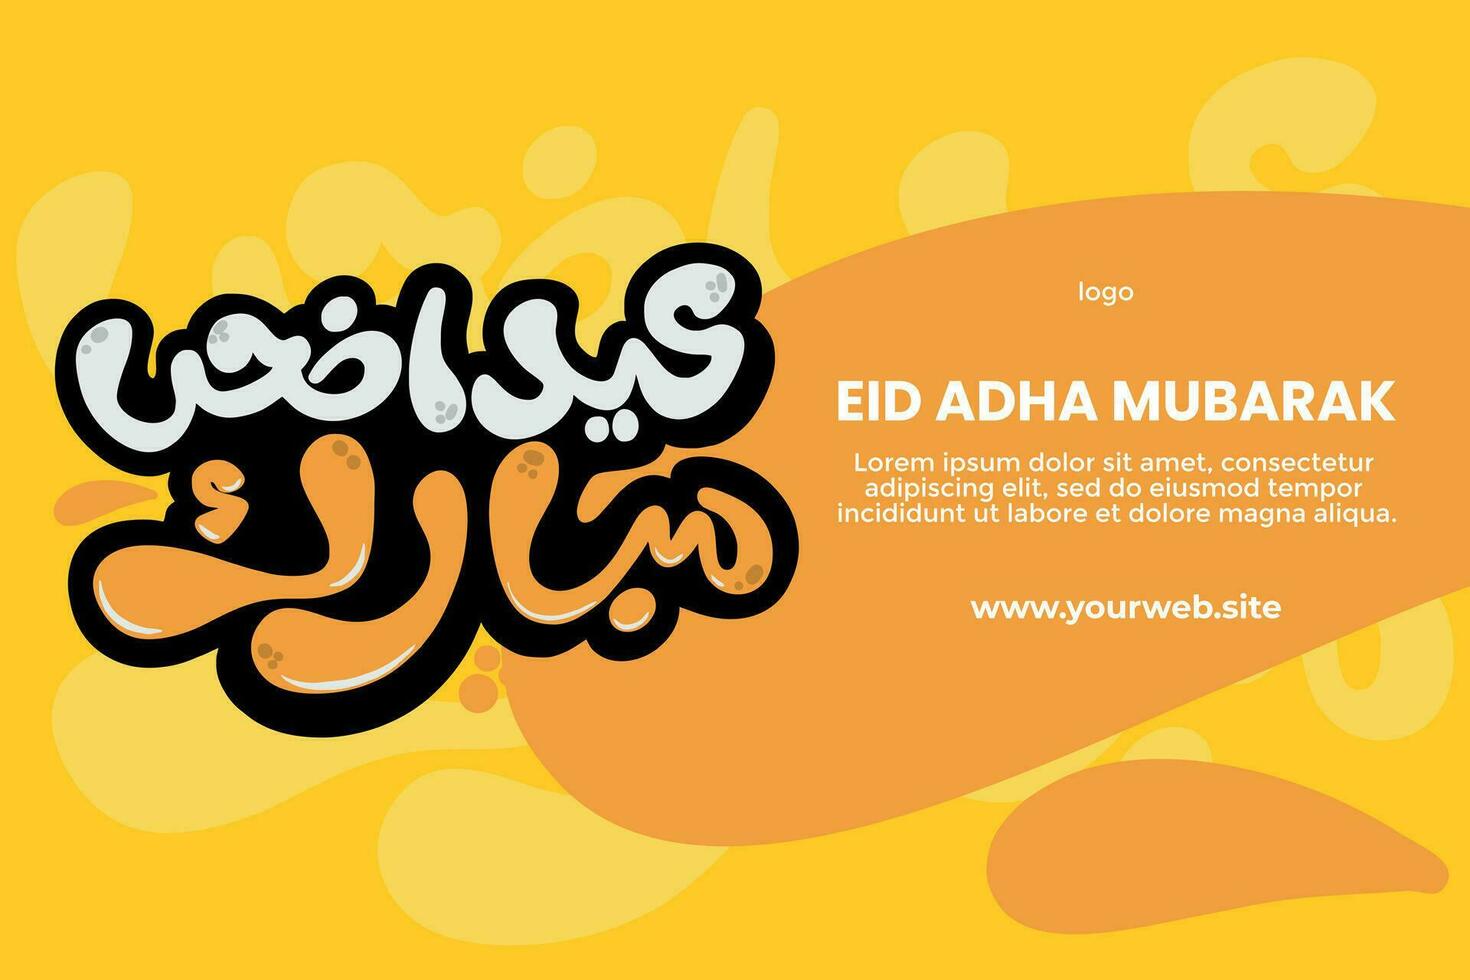 árabe caligrafia vetor do a eid cumprimento feliz eid al adha eid Mubarak lindo poster